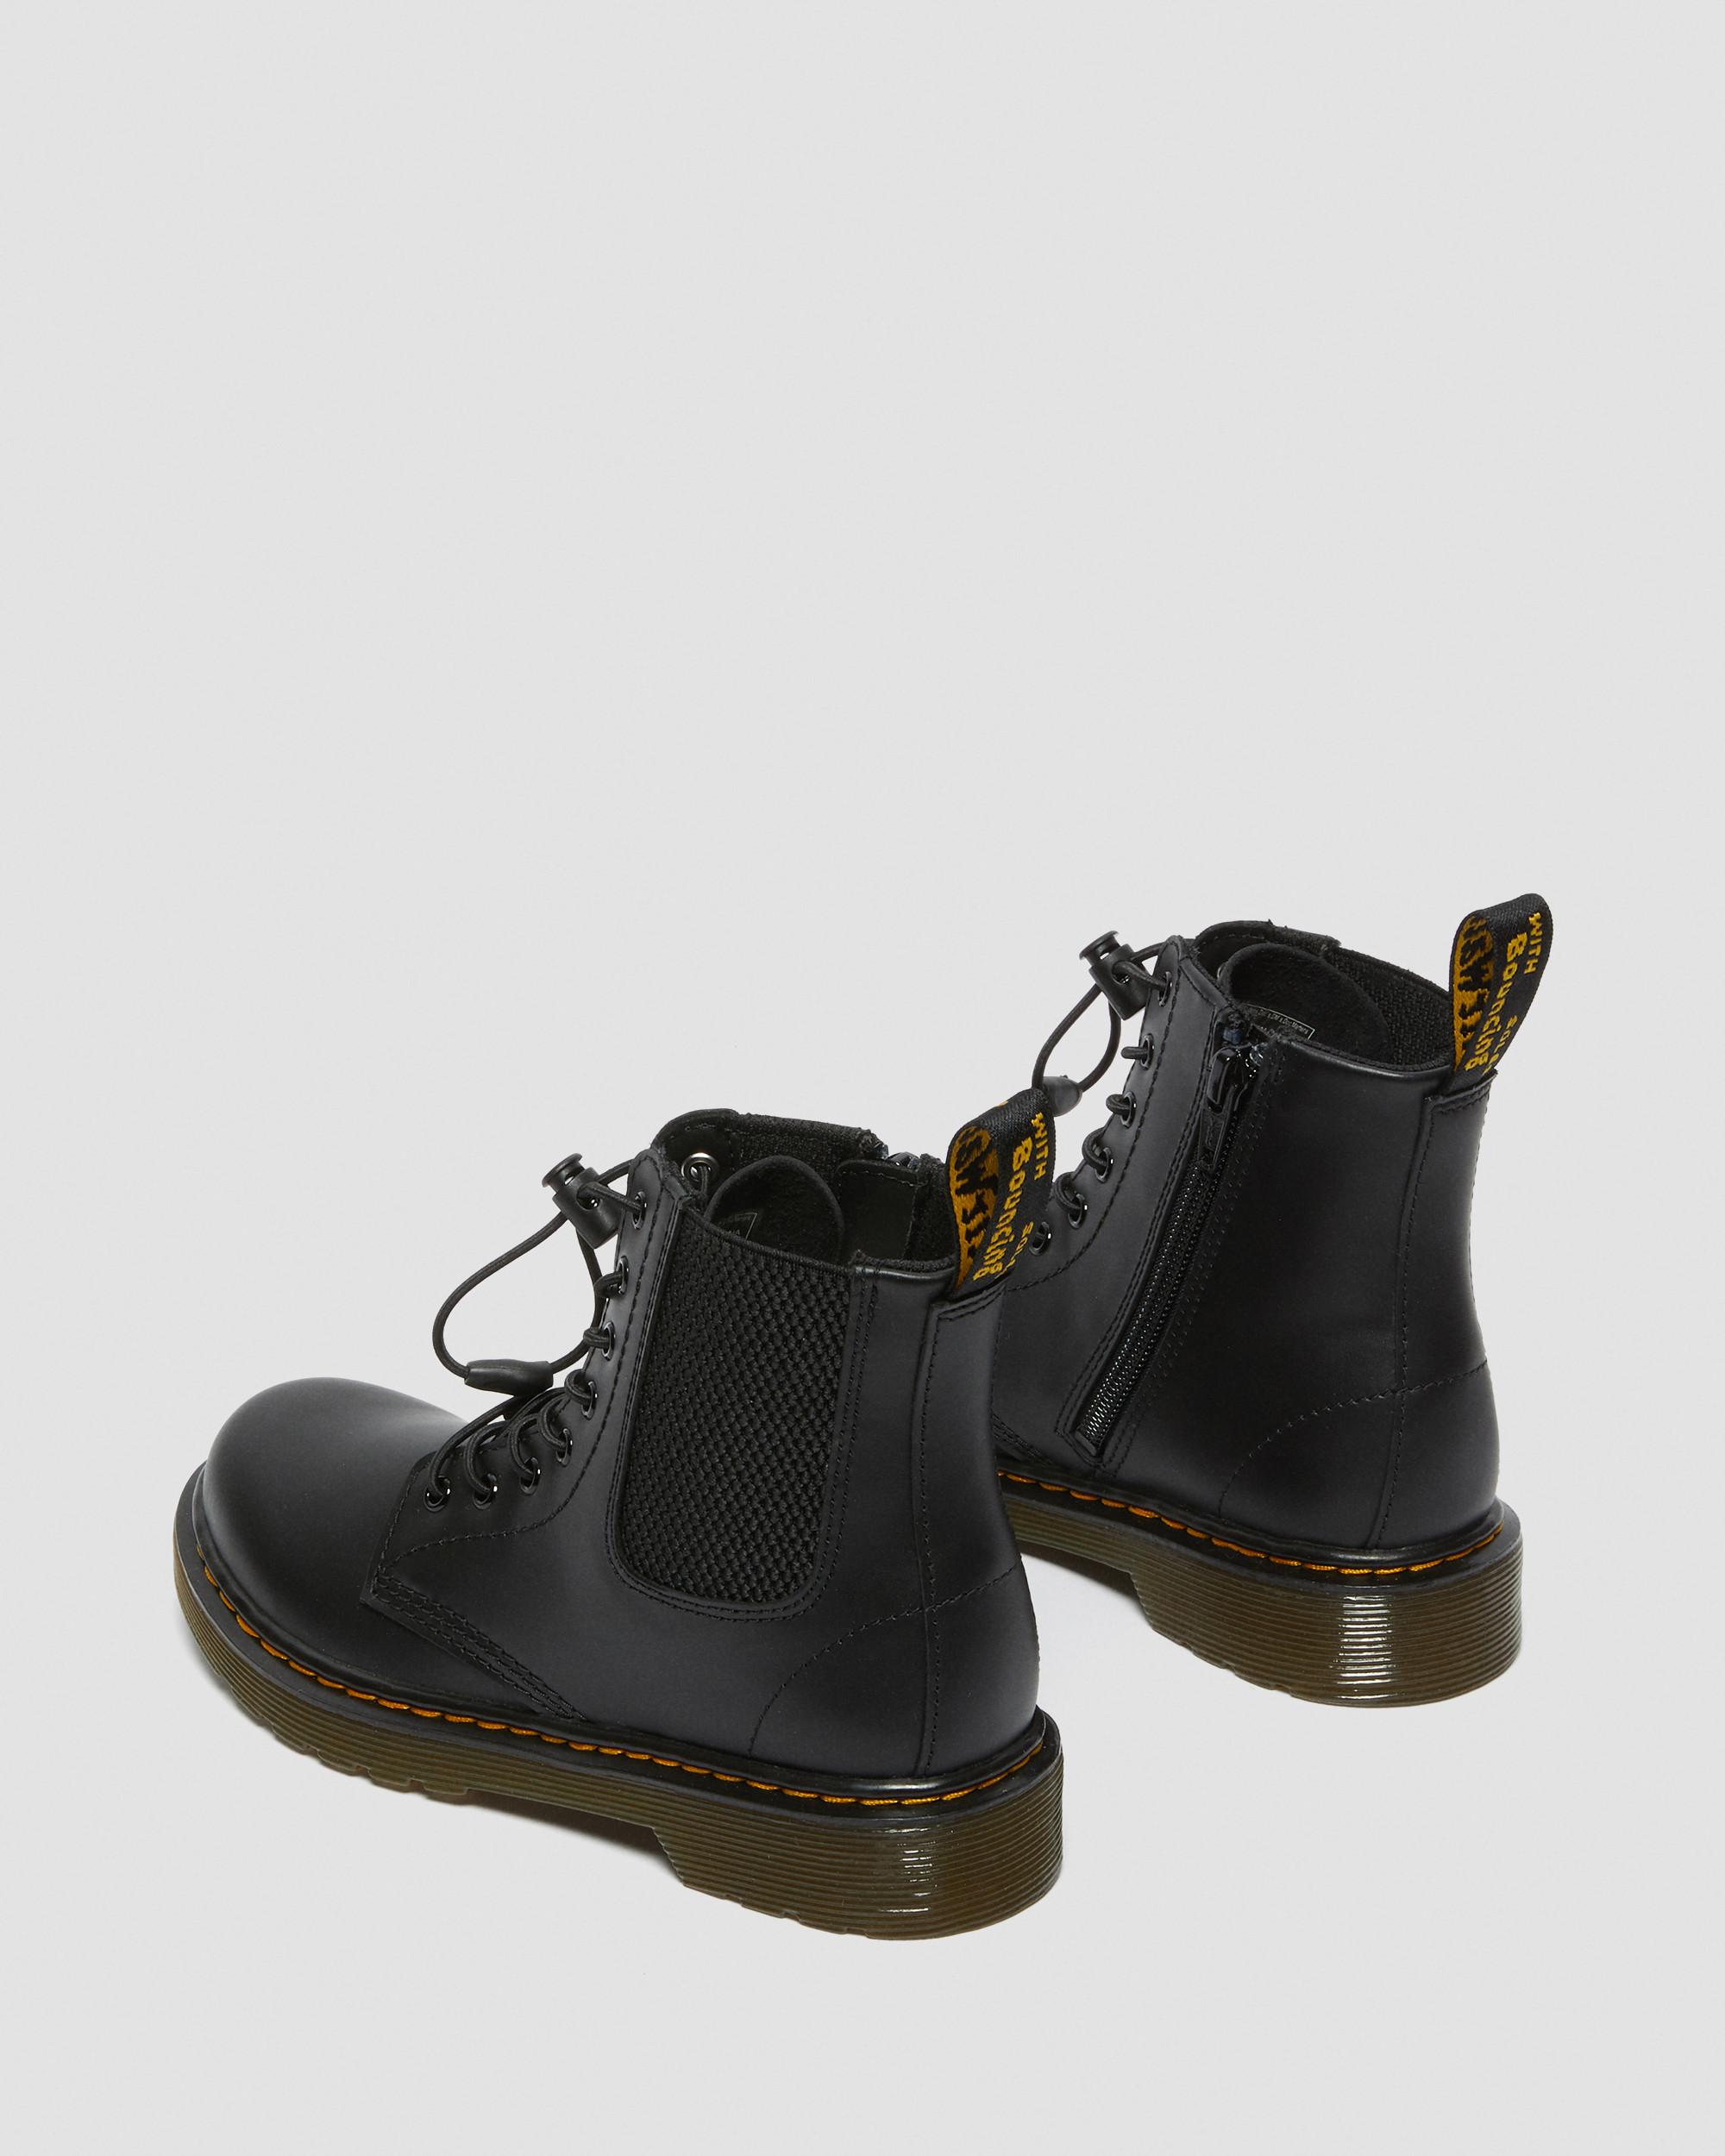 https://i1.adis.ws/i/drmartens/27081001.88.jpg?$large$Junior 1460 Harper Leather Boots Dr. Martens